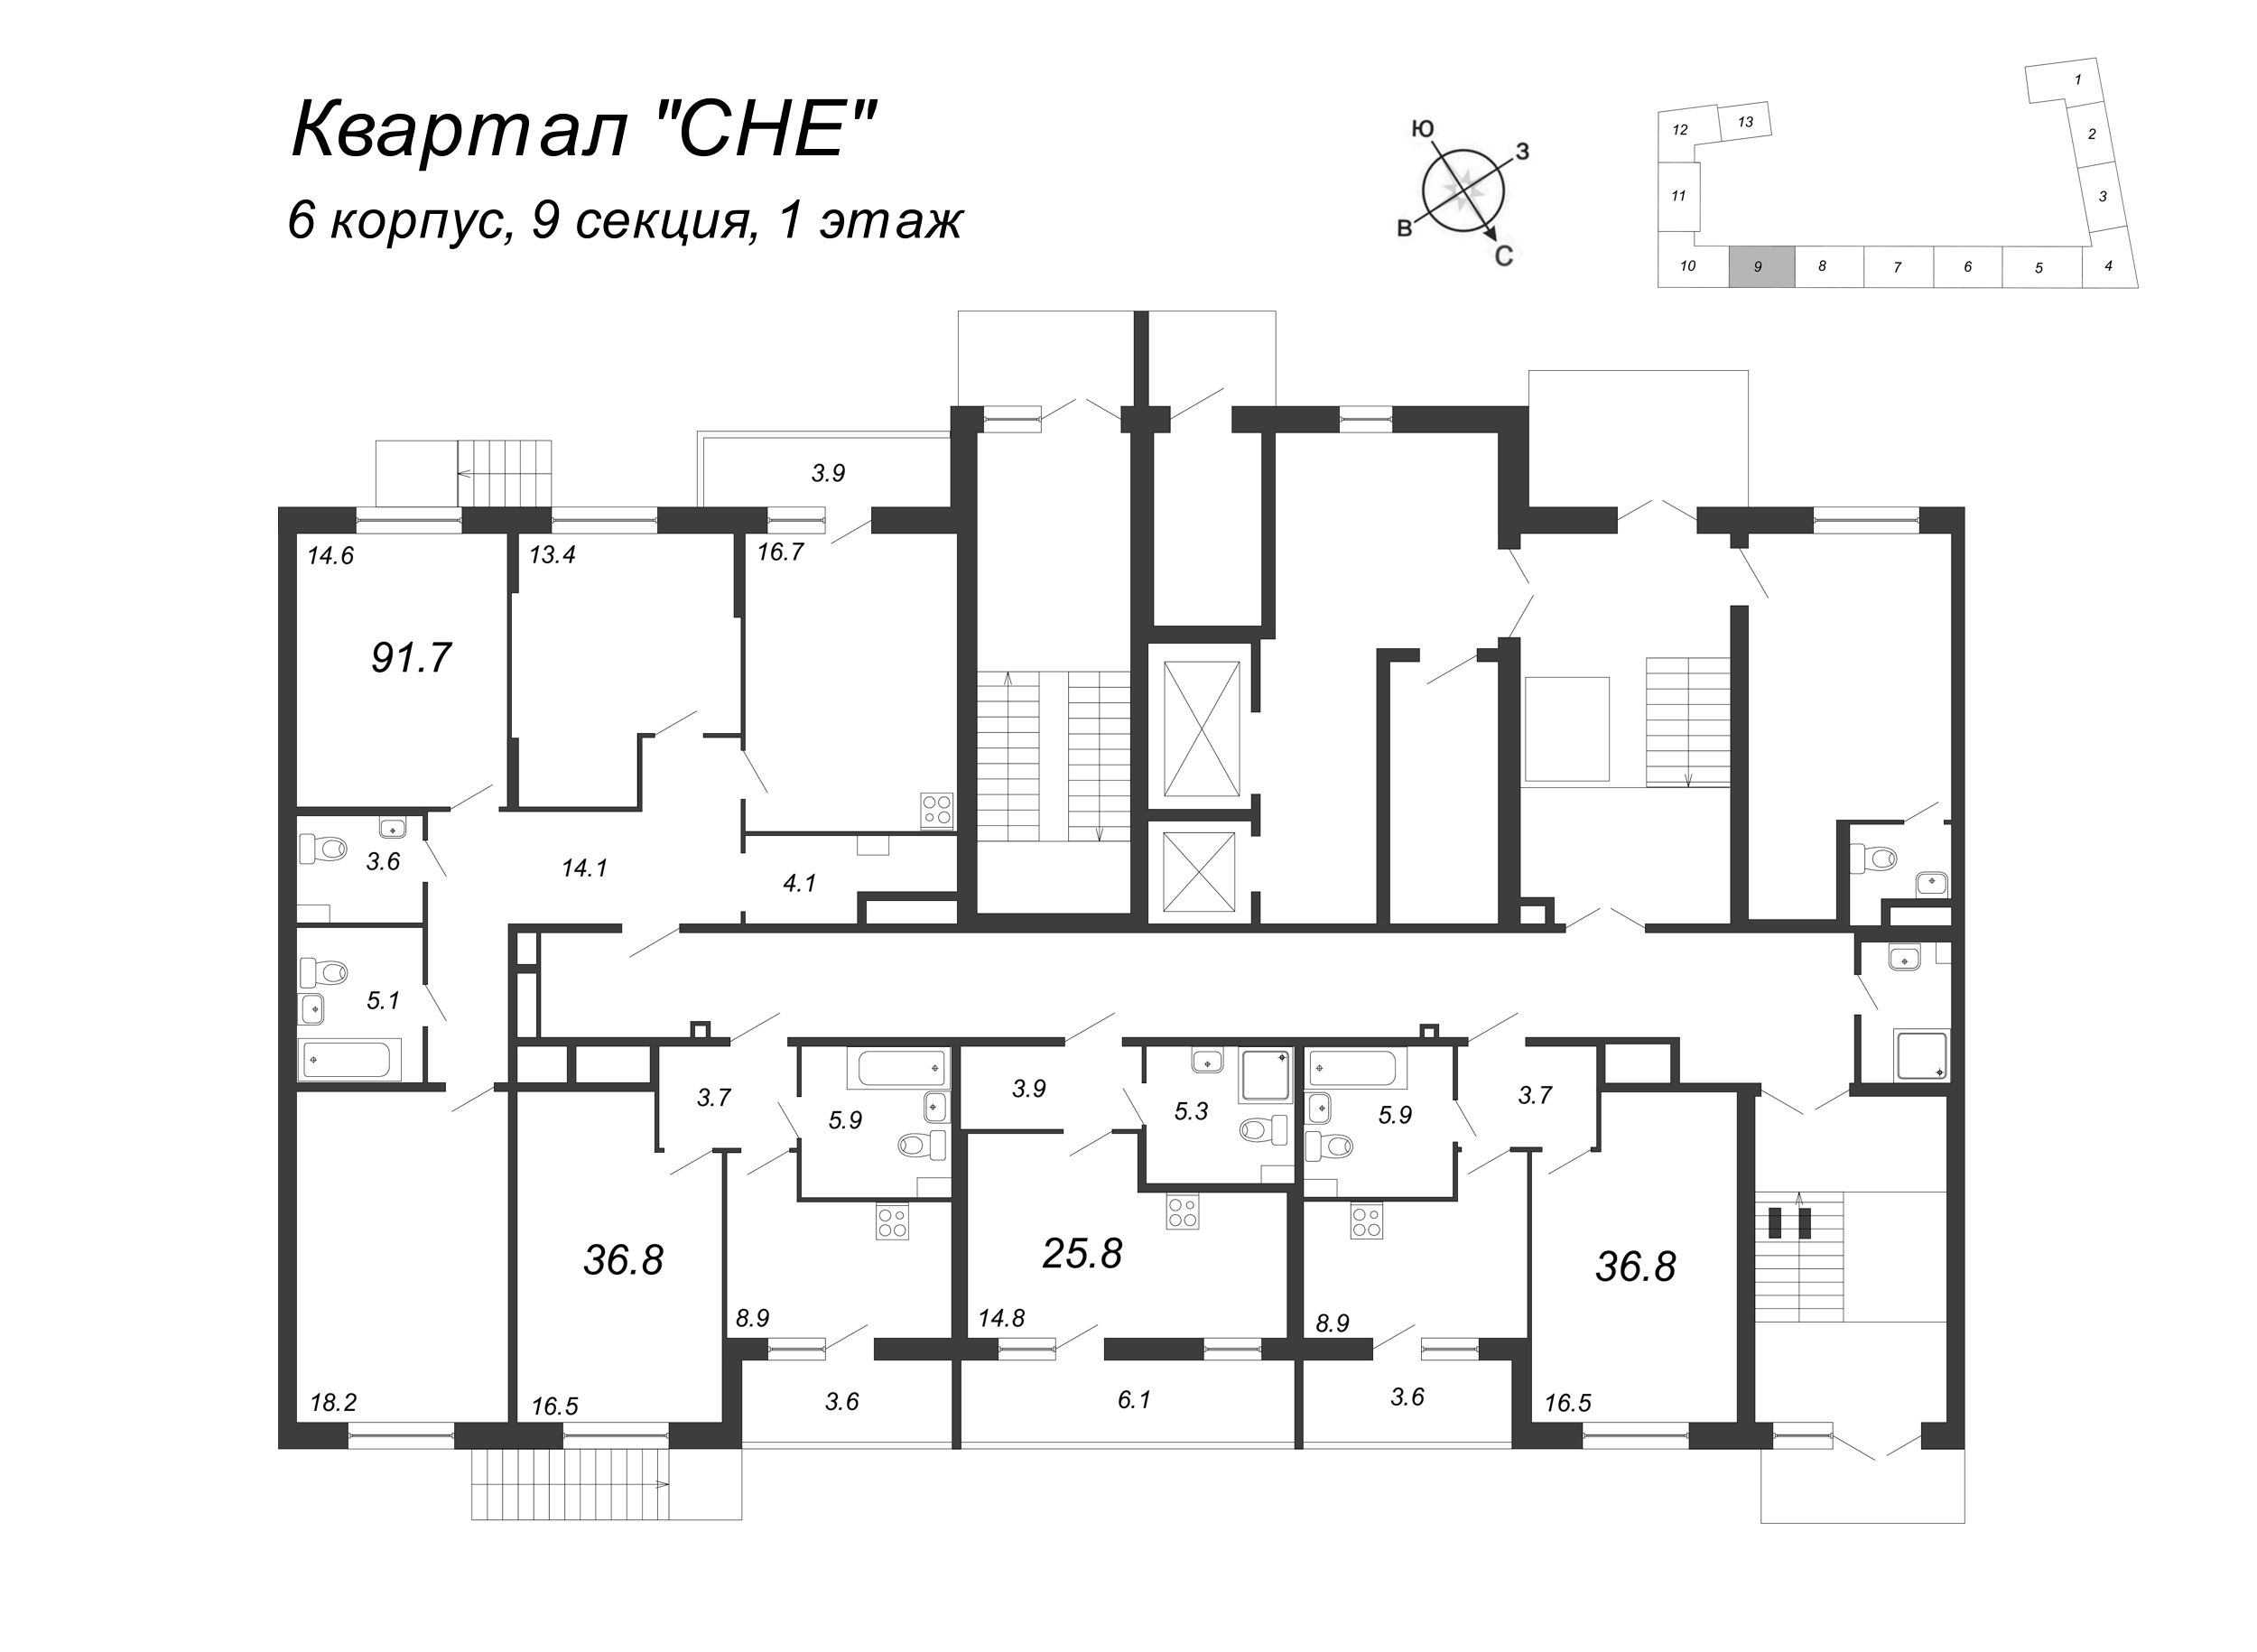 3-комнатная квартира, 93.1 м² в ЖК "Квартал Che" - планировка этажа